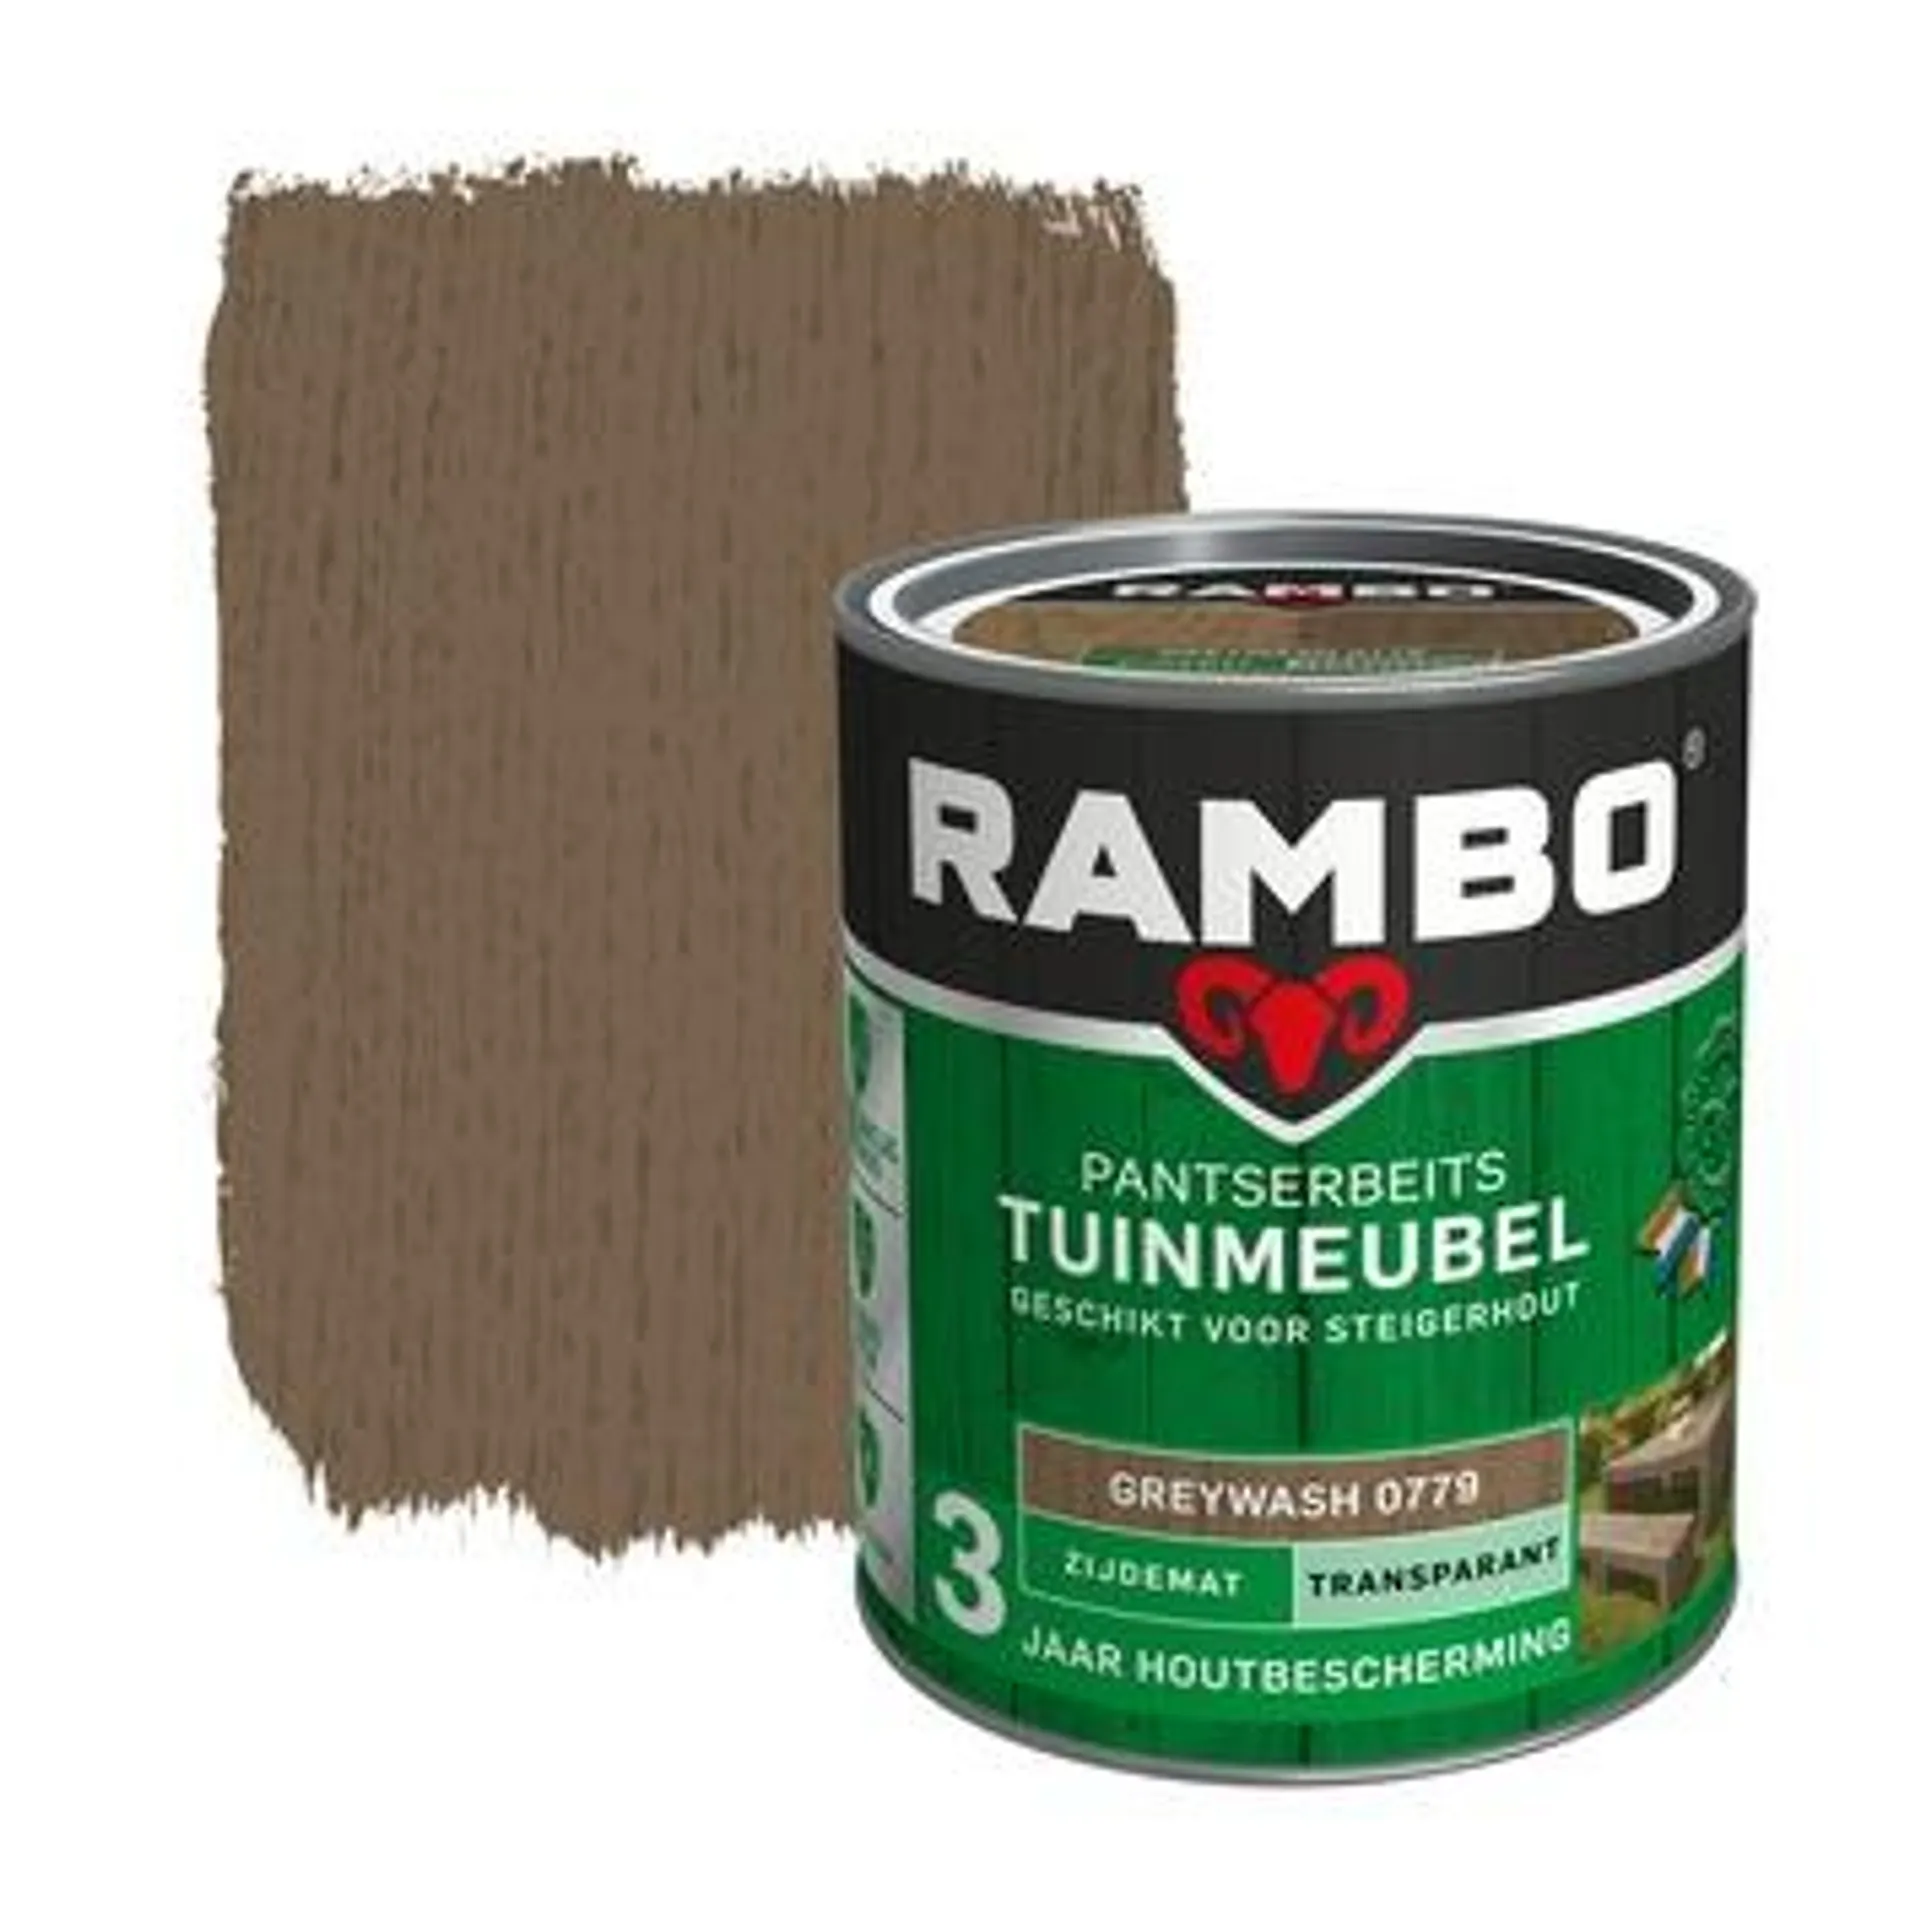 Rambo Pantserbeits Tuinmeubel zijdemat greywash transparant 750 ml